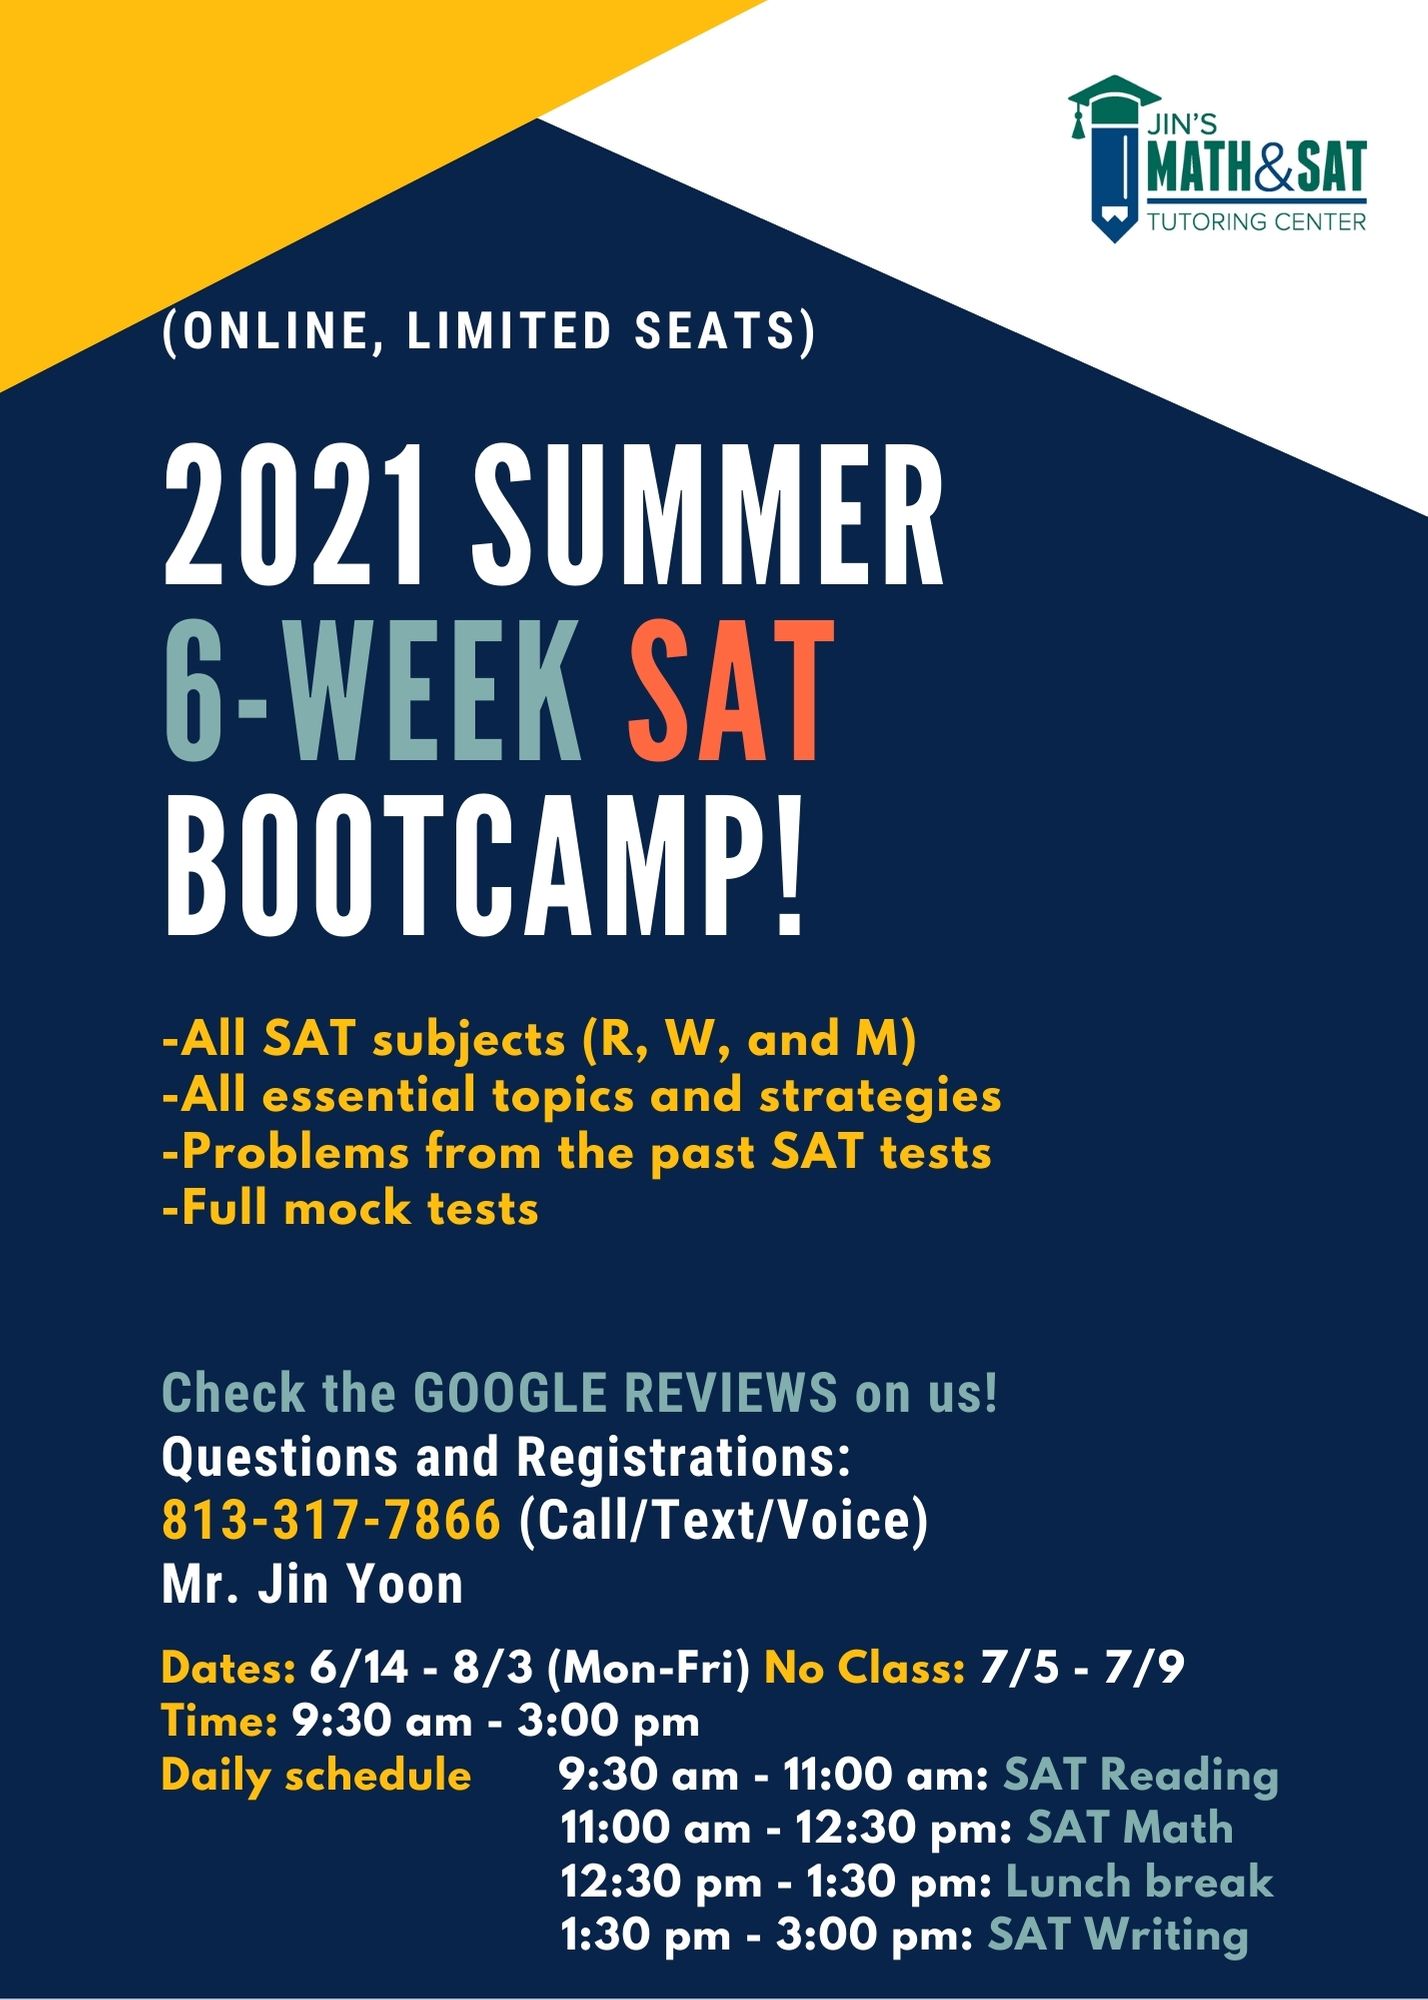 NEW CLASS ALERT! 🚨 Beast Box Bootcamp - Saturdays at 8:30AM with